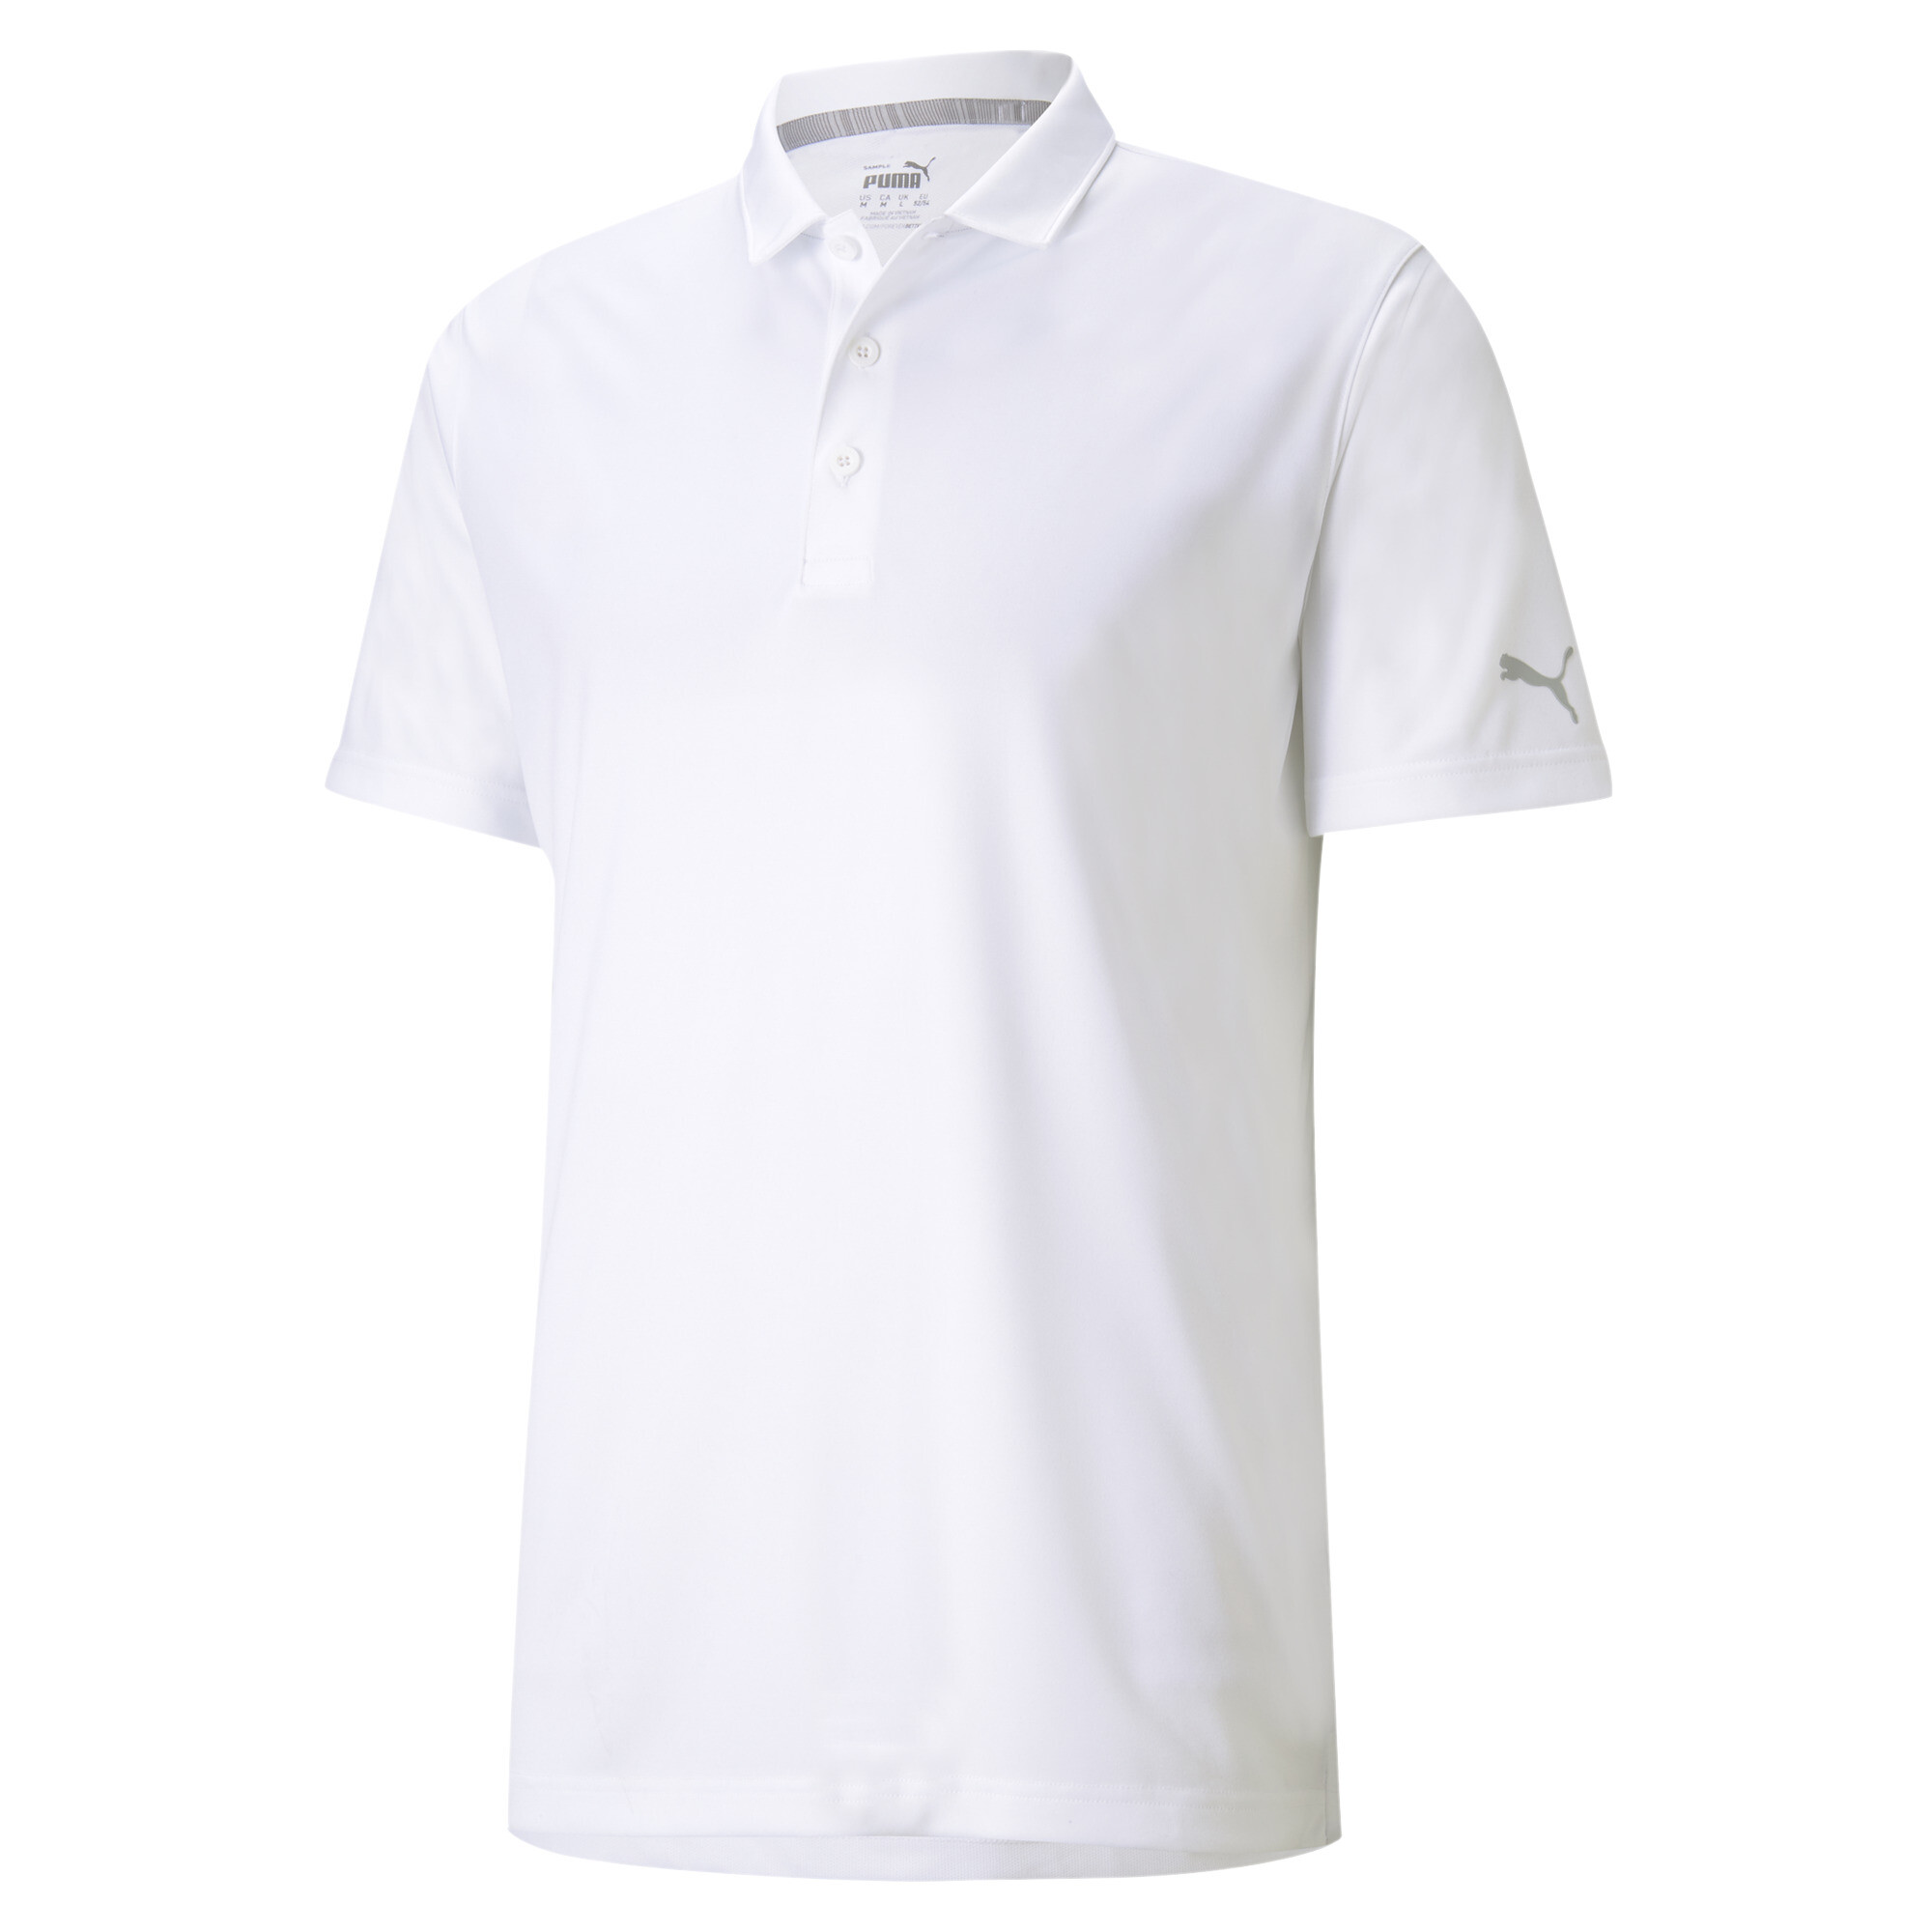 Men's Puma Gamer's Golf Polo Shirt T-Shirt, White T-Shirt, Size 5XL T-Shirt, Clothing